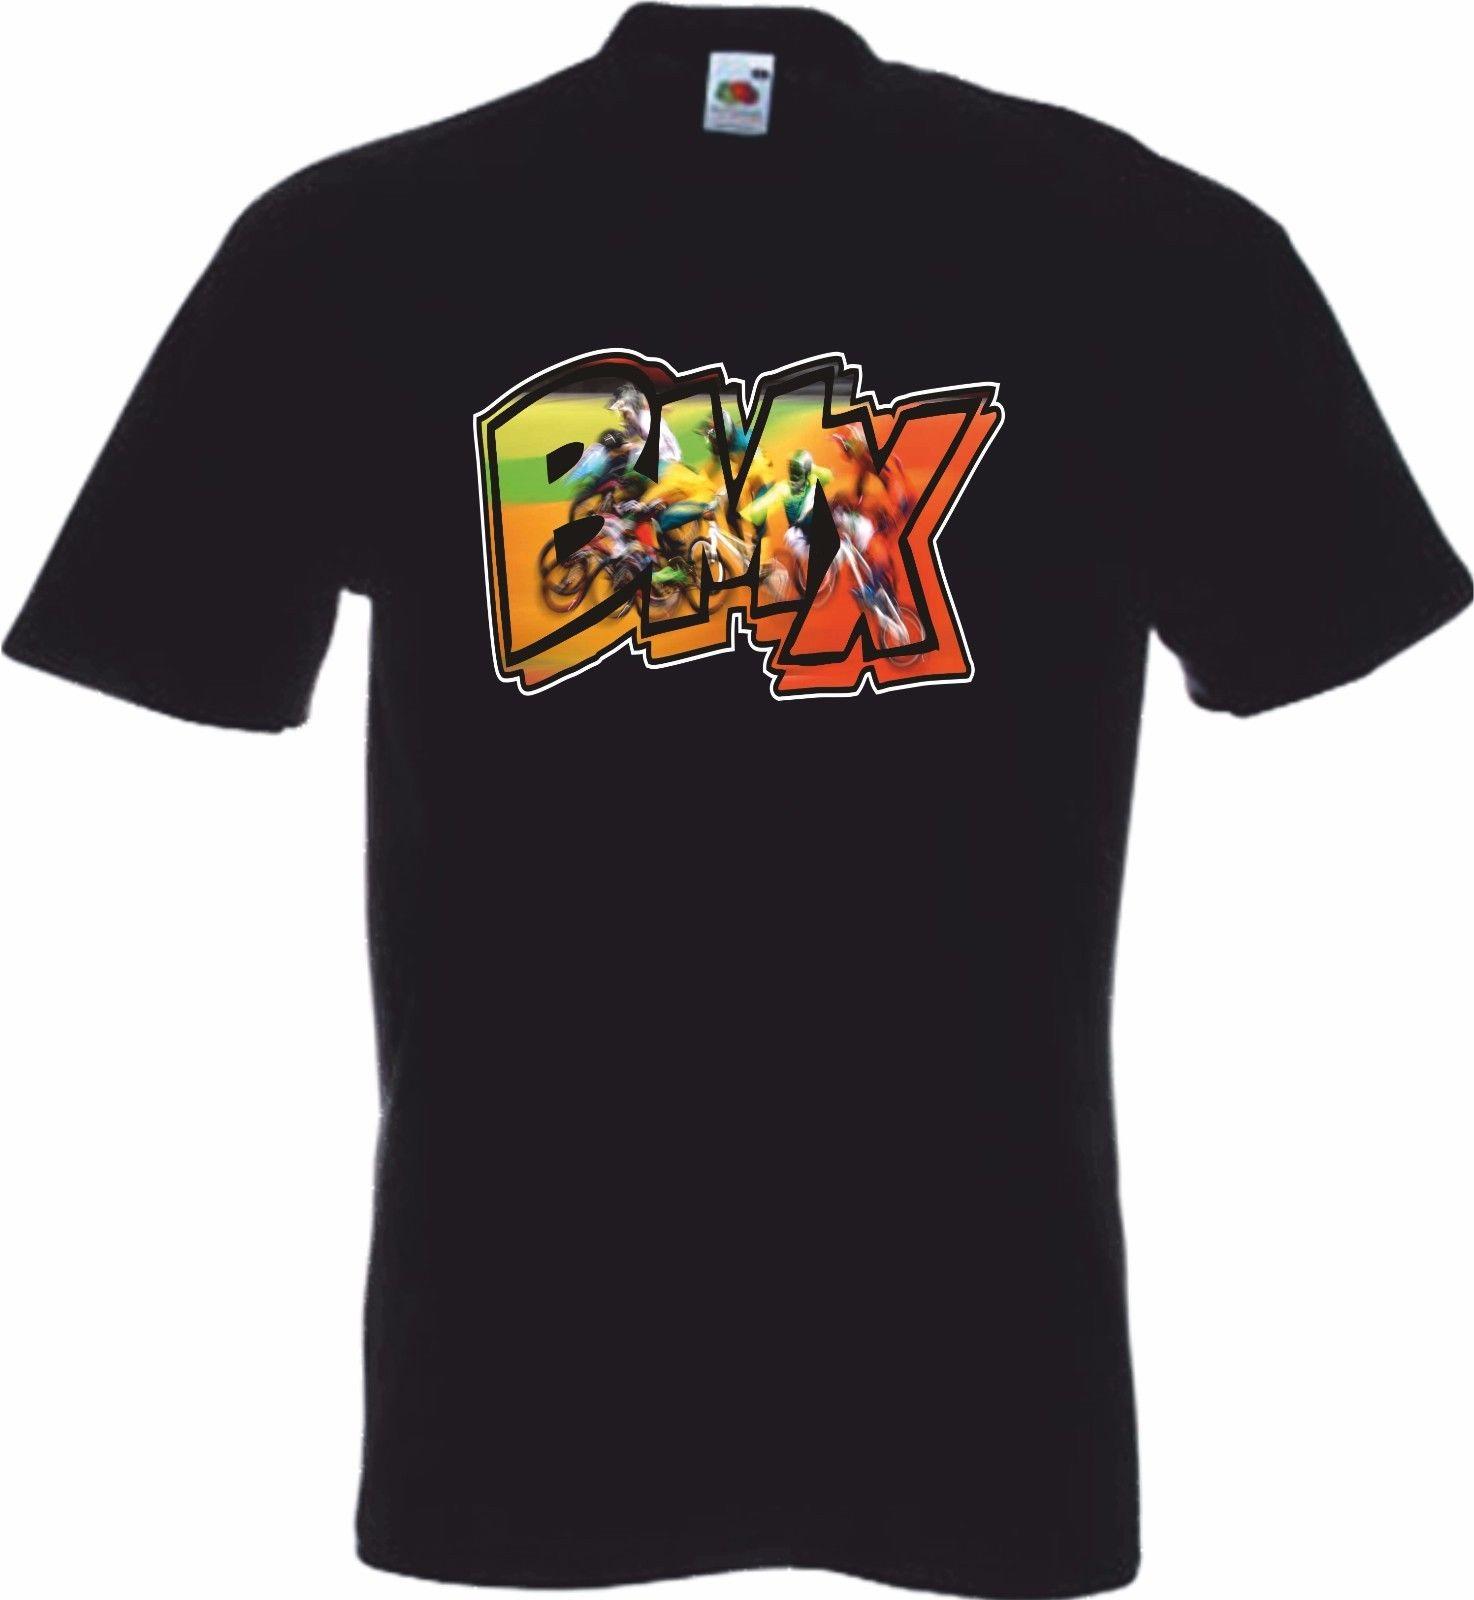 Cool BMX Logo - Bmx Race Blur Logo Retro T Shirt Racing Cycling Bike Stunt Biker ...